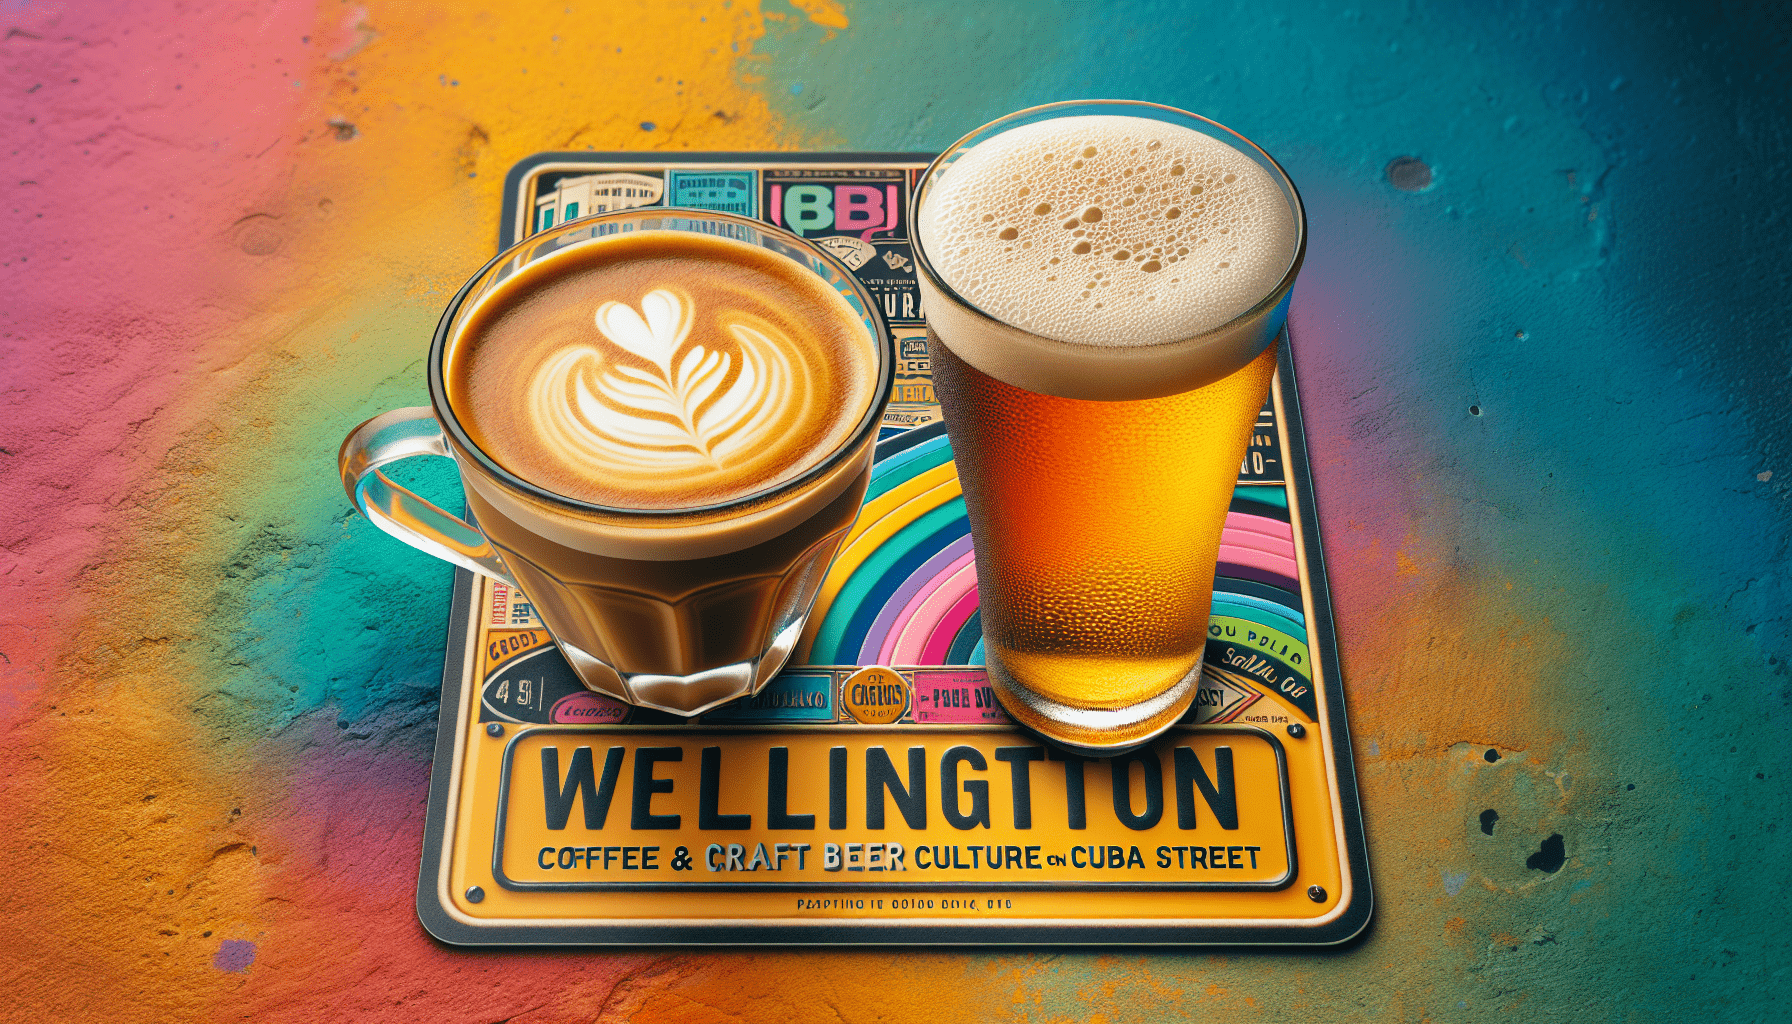 Experience Cuba Street: Wellington’s Coffee and Craft Beer Scene